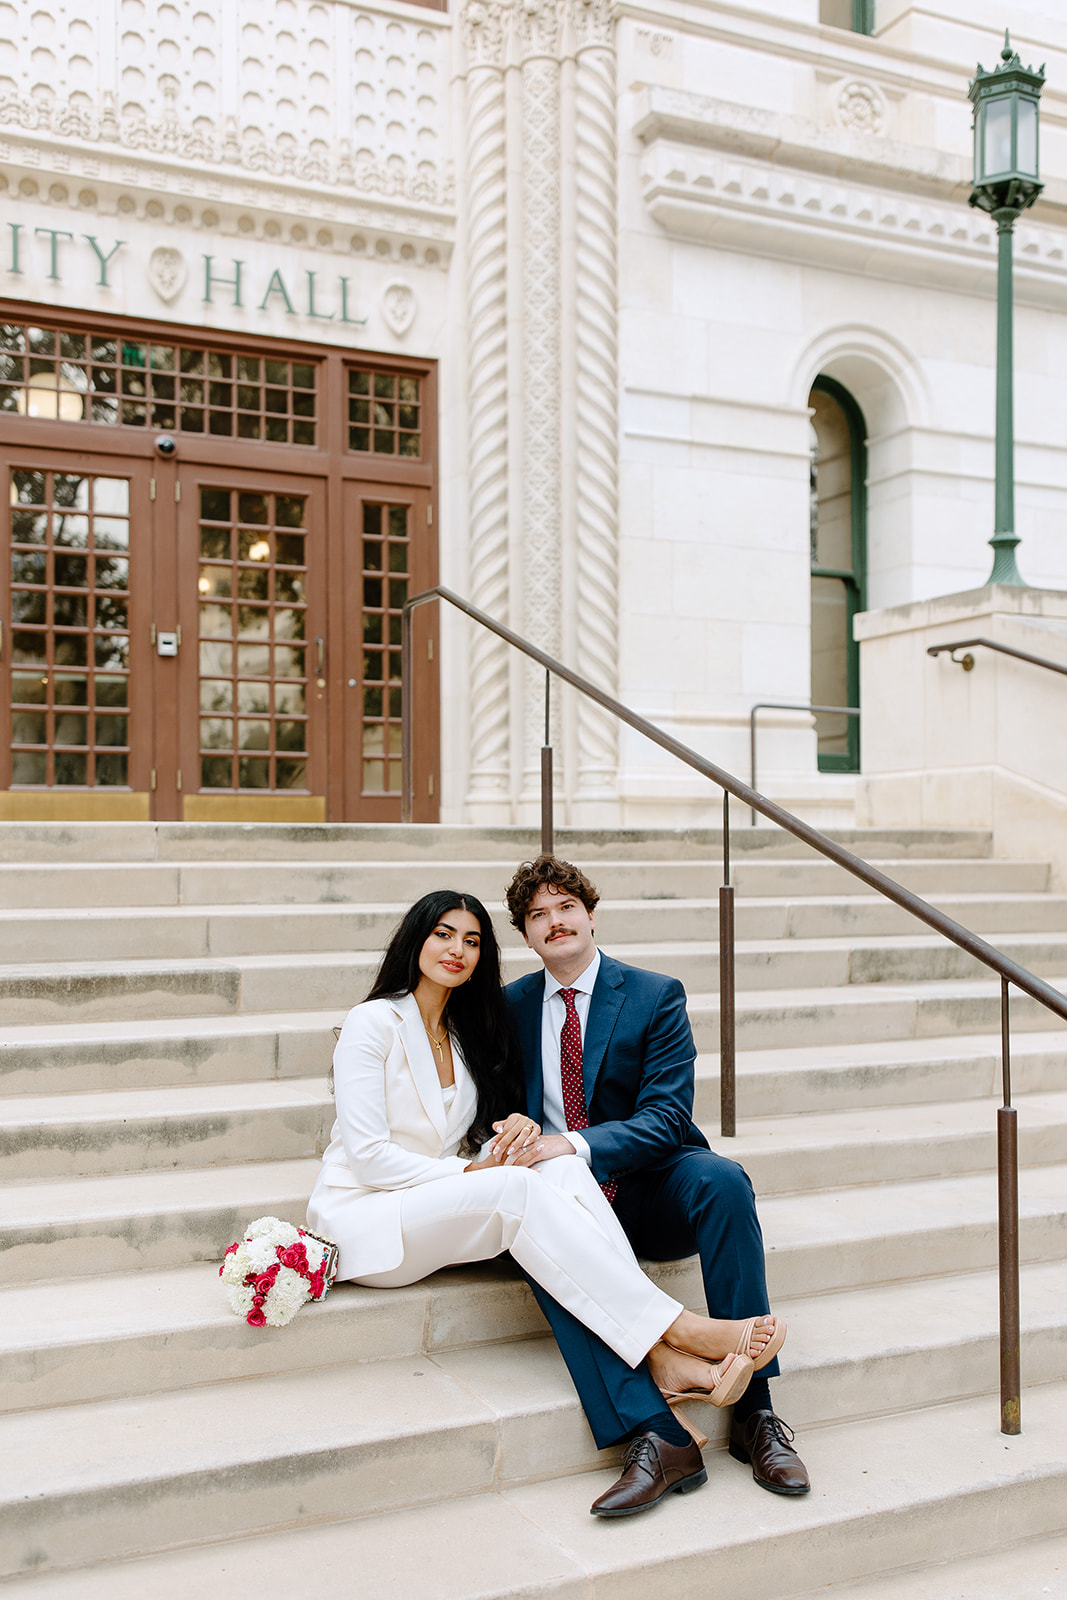 Bride and groom sitting on city hall steps